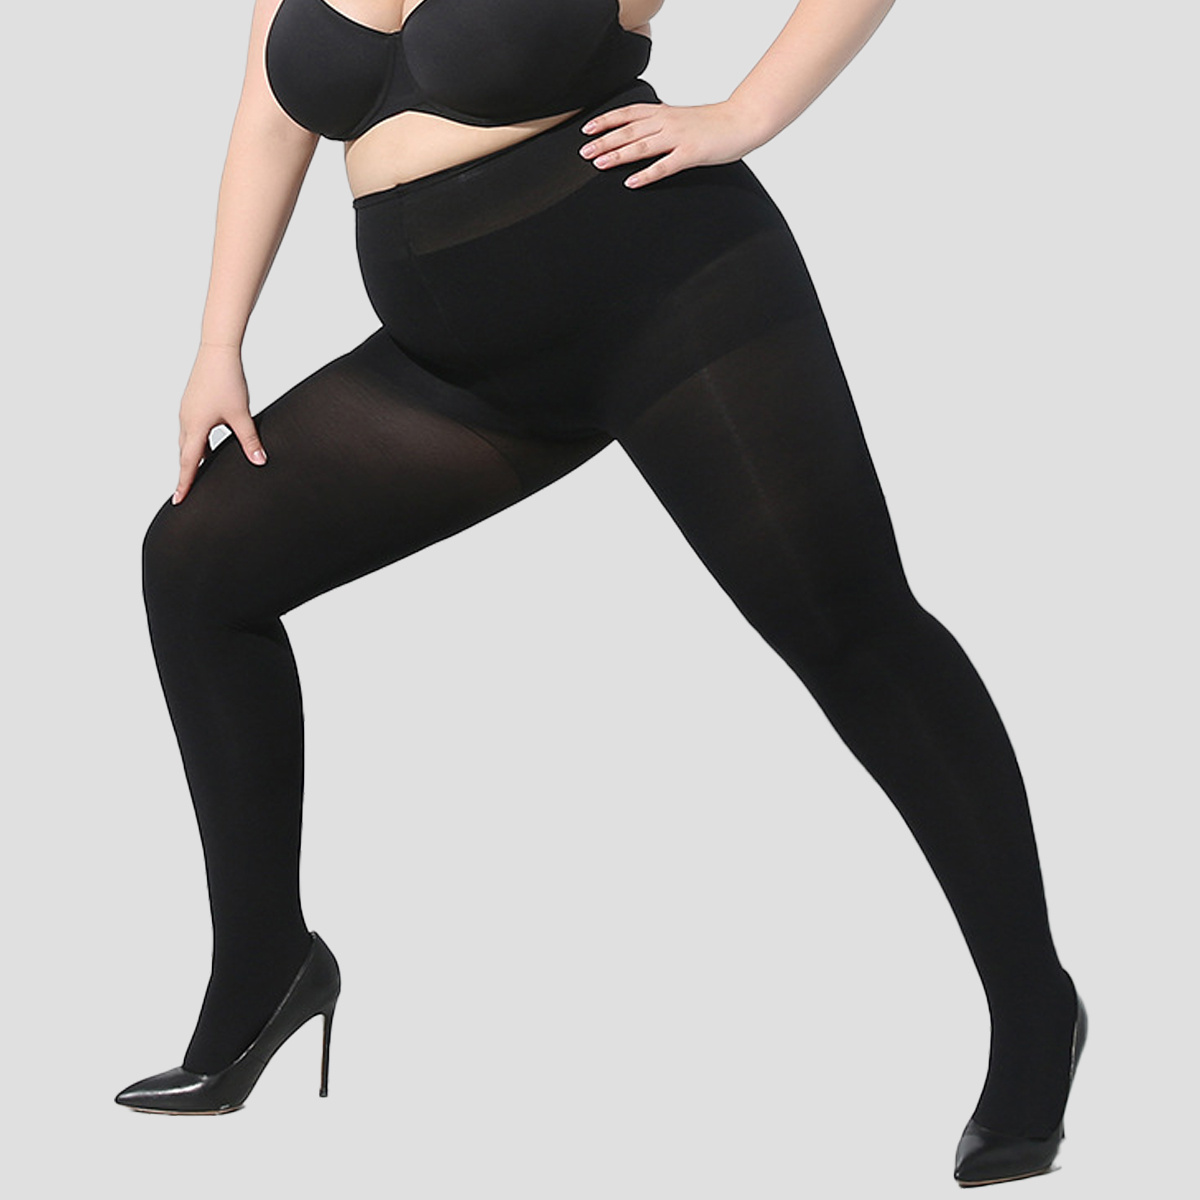 YZRDY Sexy Women Tights Winter Warm Pantyhose Nylon Pantyhose Stretchy Long  Stockings Plus Velvet Pantyhos (Color : Black with feet, Size : 100g) :  : Fashion